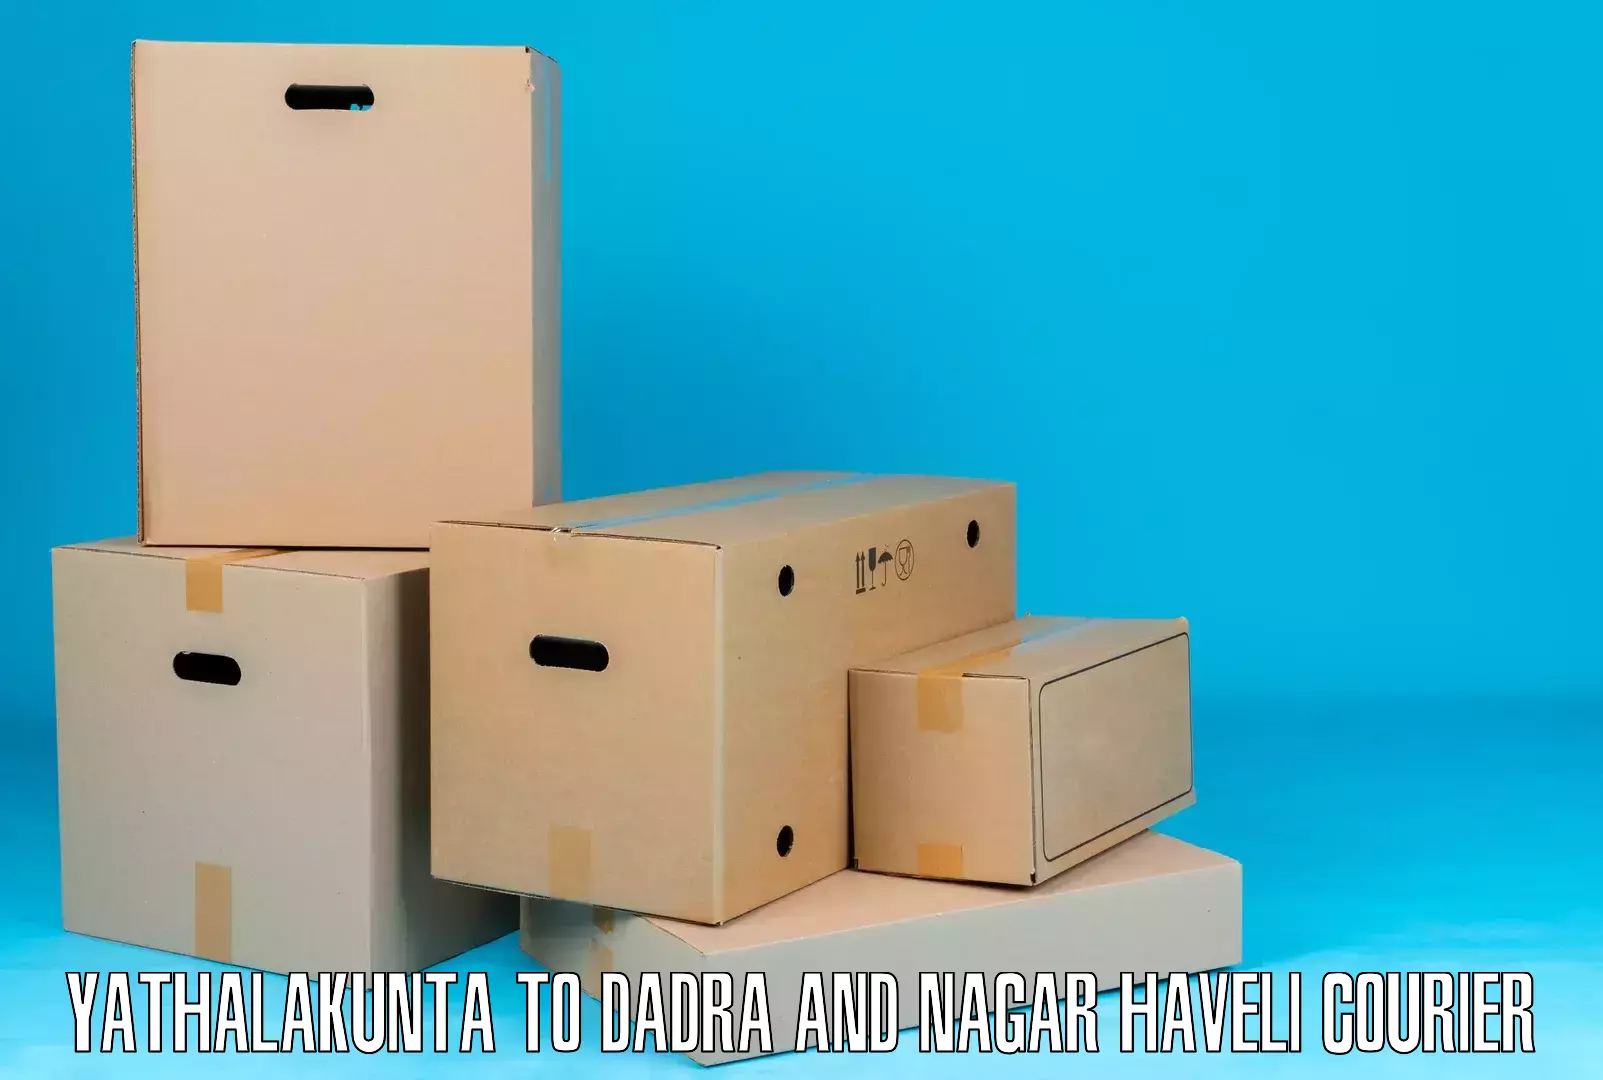 Efficient parcel transport Yathalakunta to Silvassa